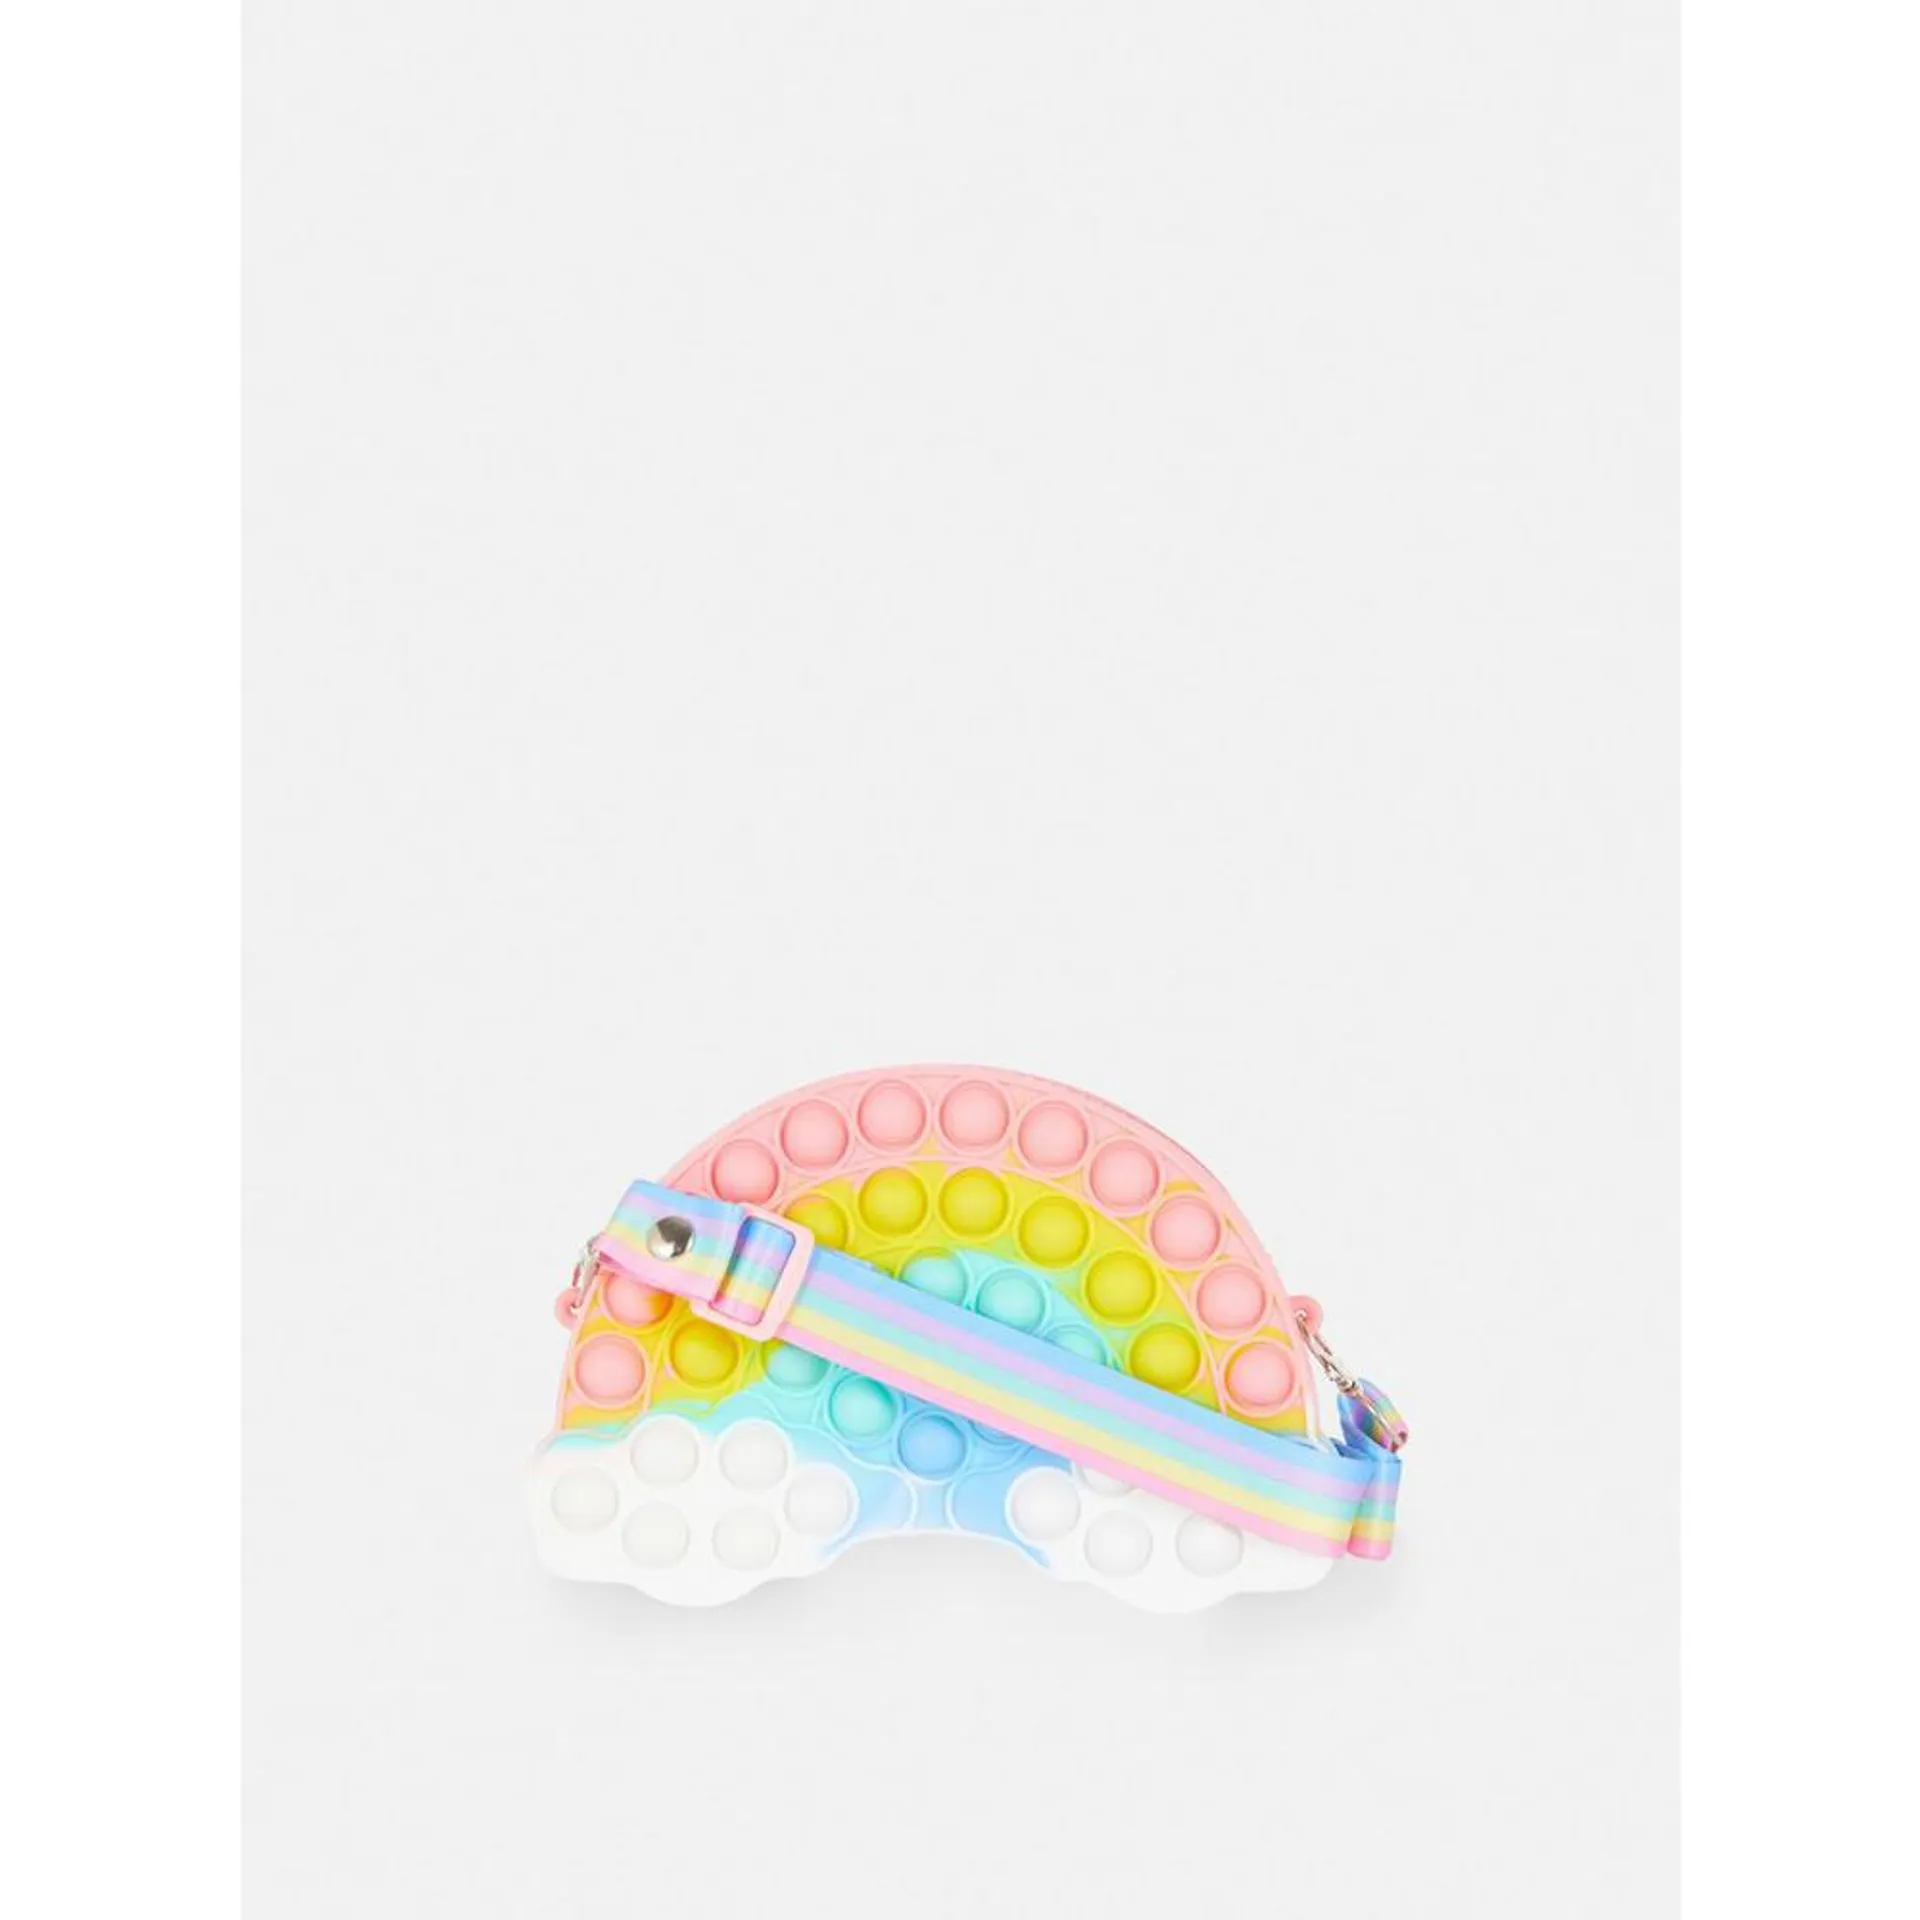 Push-Pop-Tasche in Regenbogenform